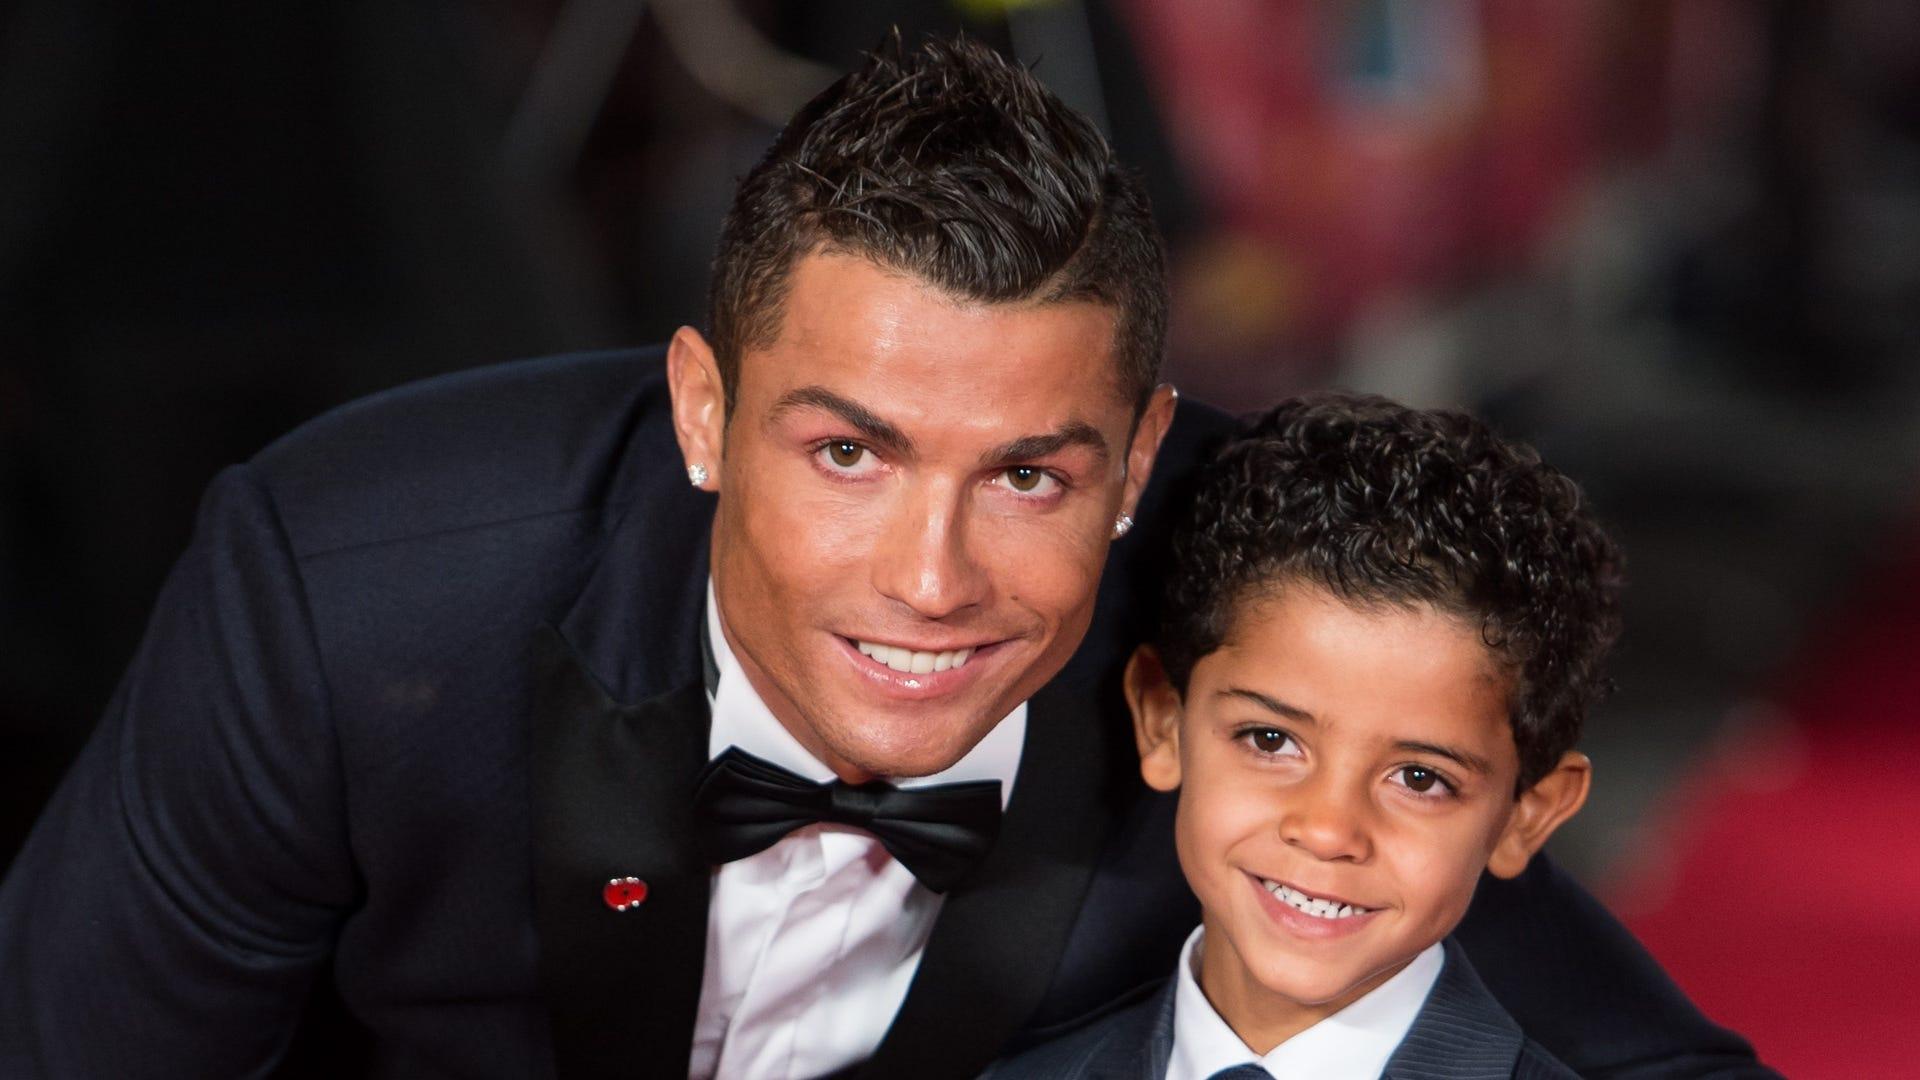 Cristiano Ronaldo: A Look at His Growing Family